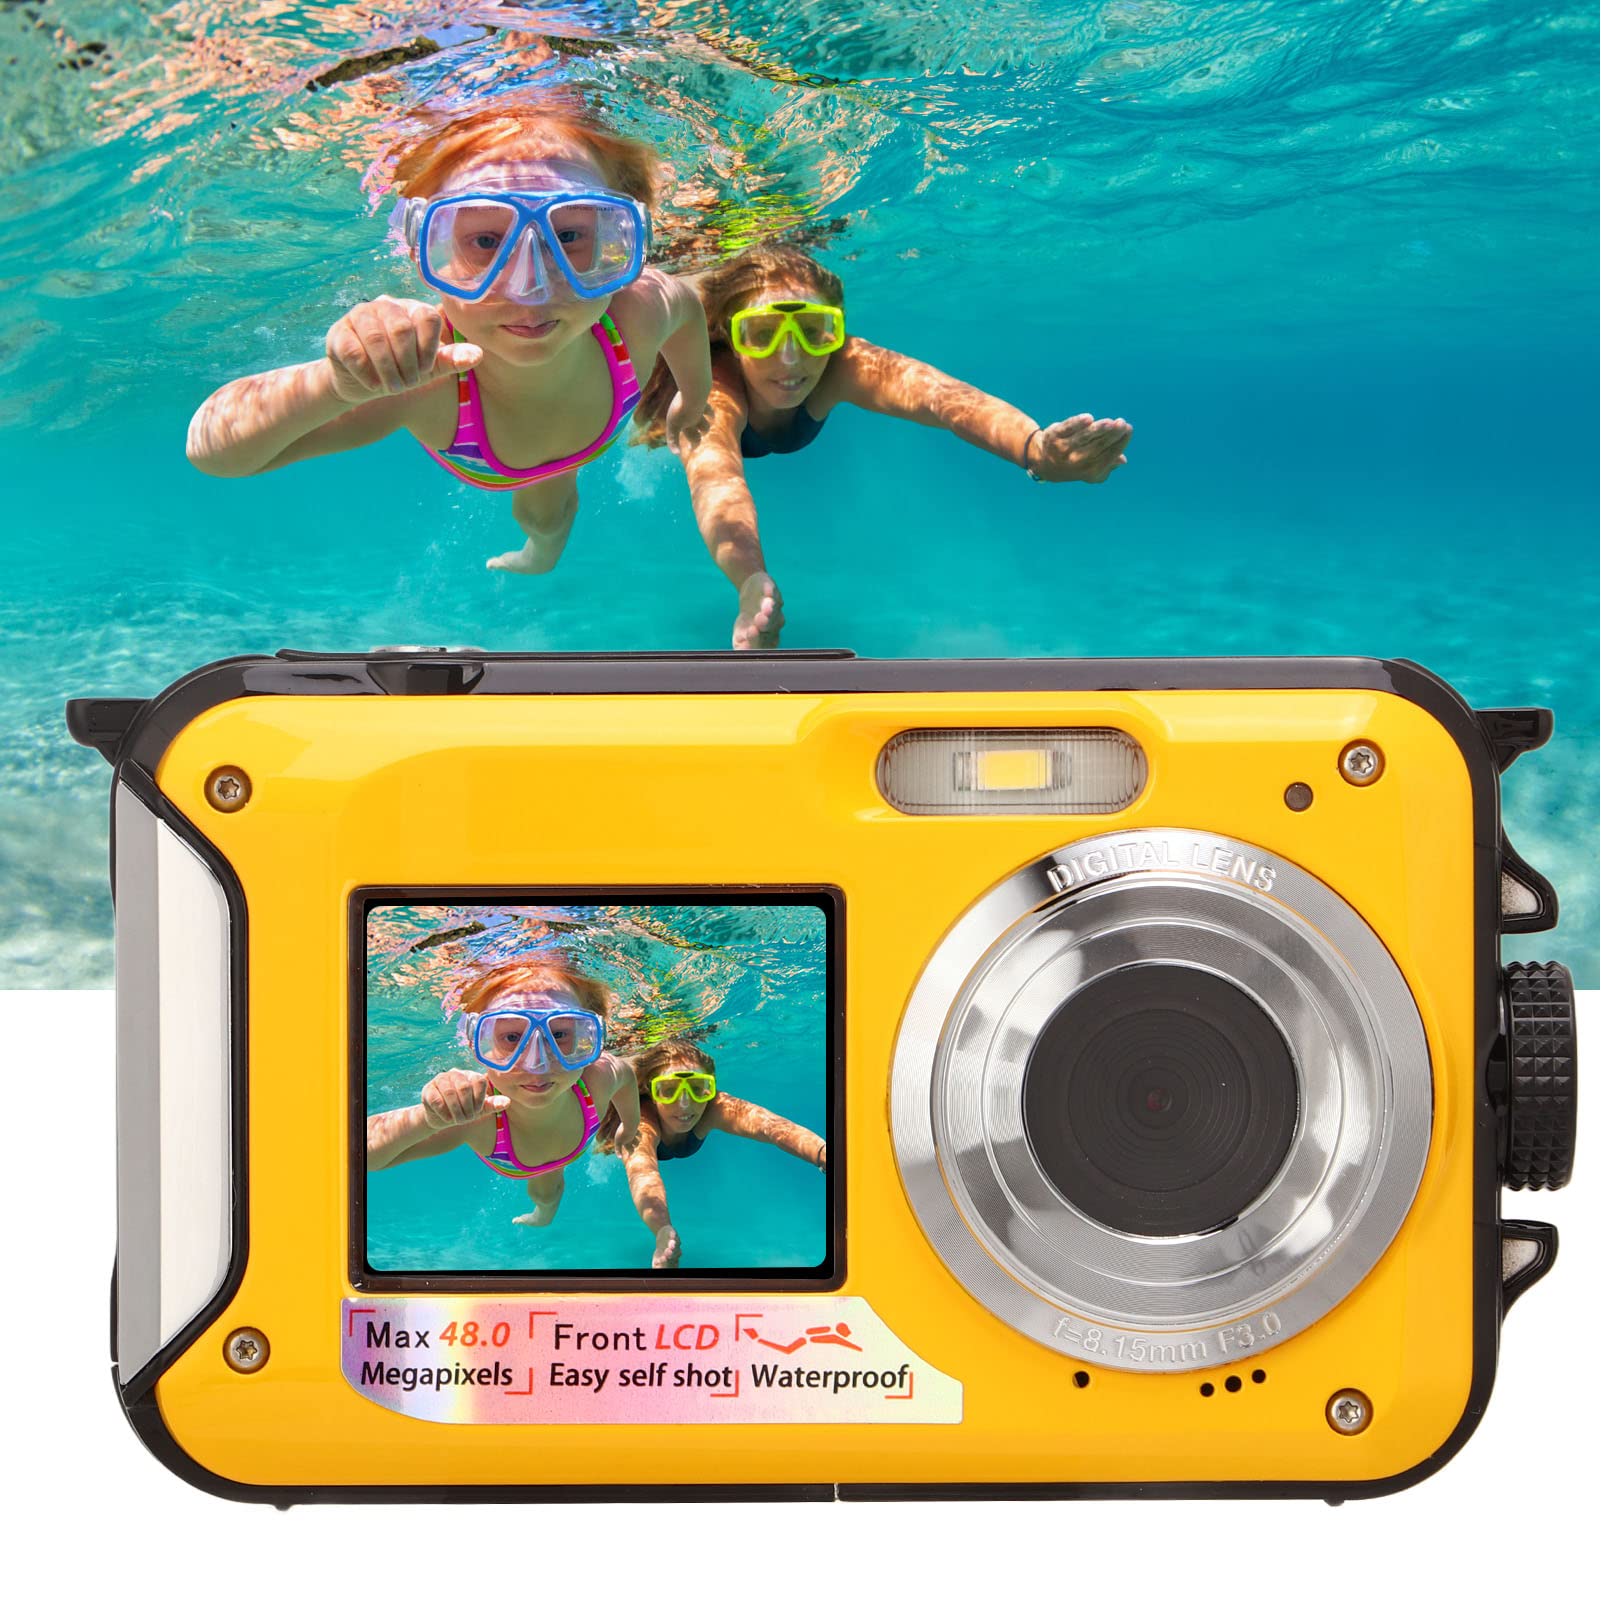 Waterproof Camera Underwater Camera 10 FT 2.7K Full HD 48MP 16X Digital Zoom Waterproof Digital Camera Self-Timer Dual Screens Anti Shake for Snorkeling,plplaaoo Travel and Vacation(Yellow), Wat